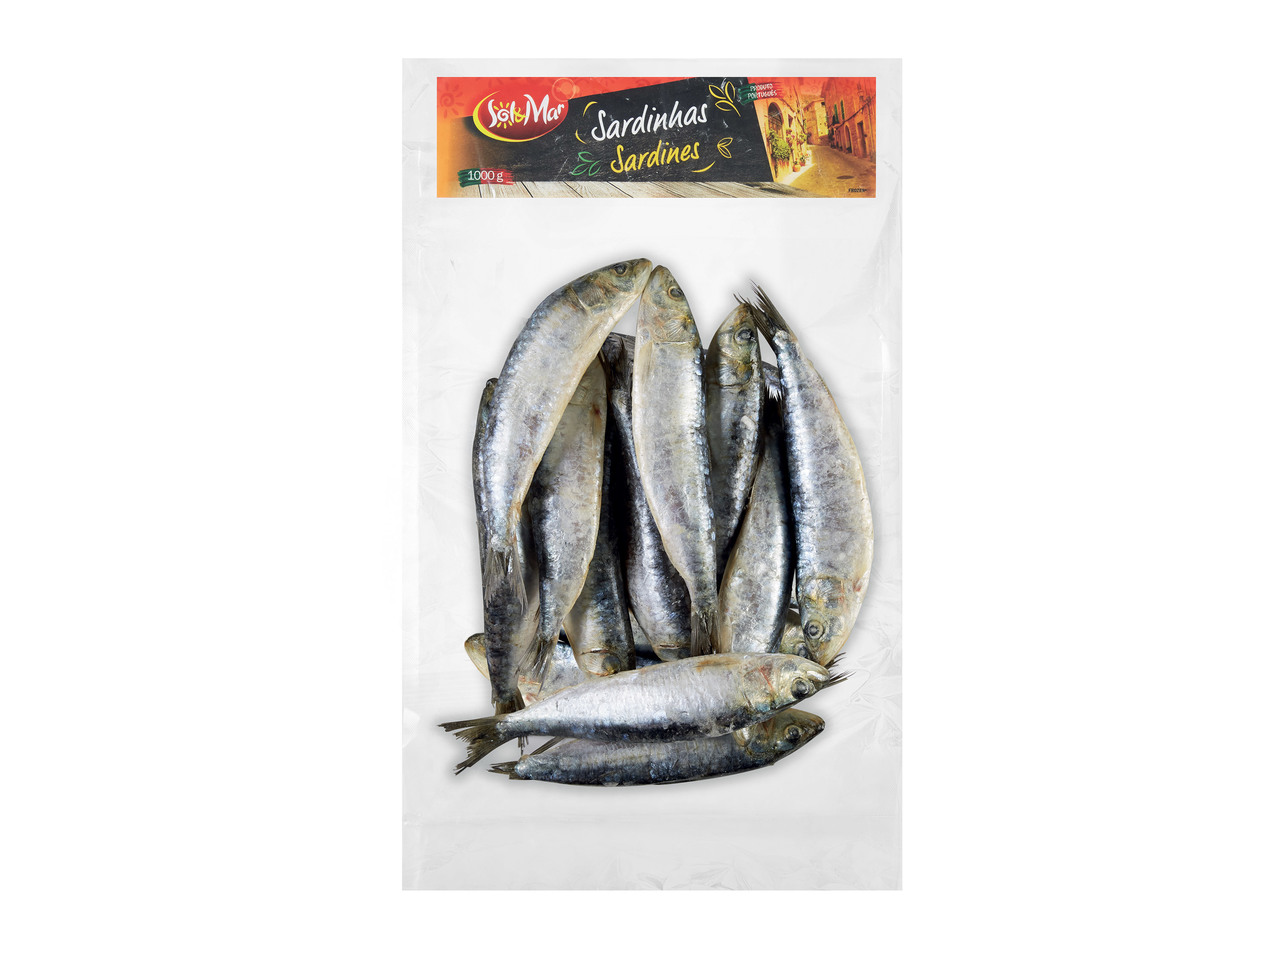 Sardines1